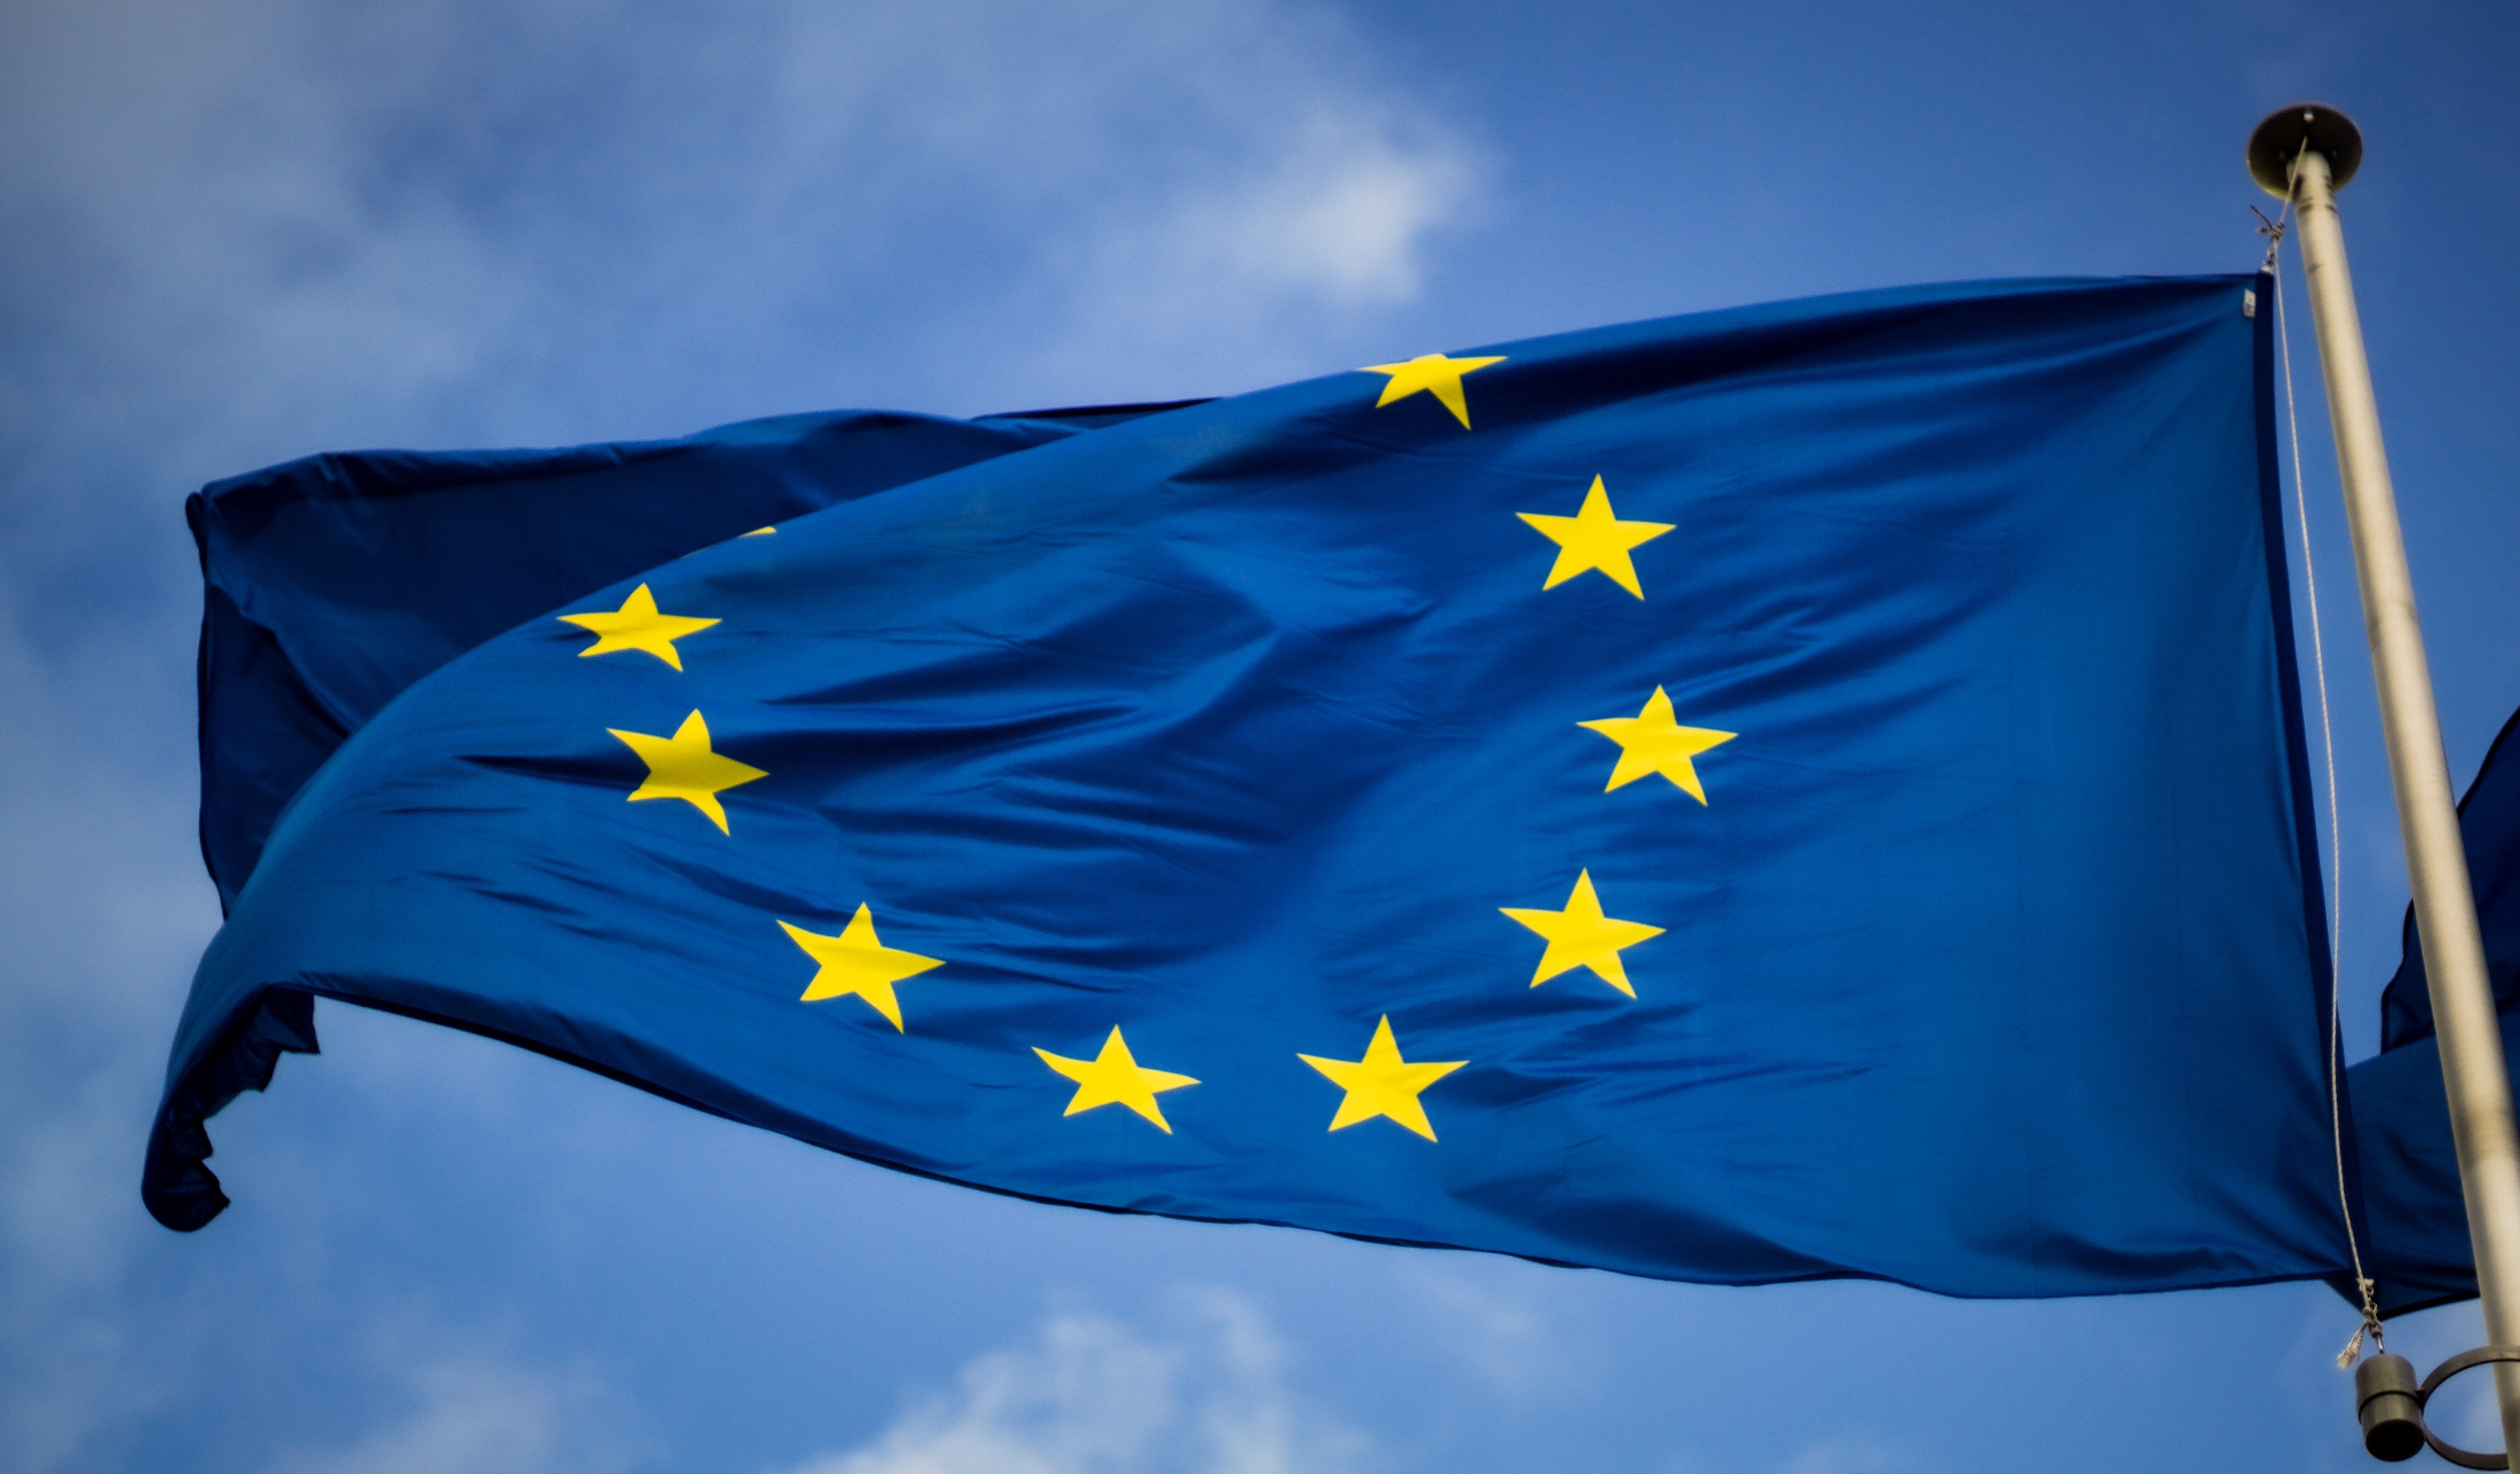 EU Flag (Image credit: Christian Lue, 2023)